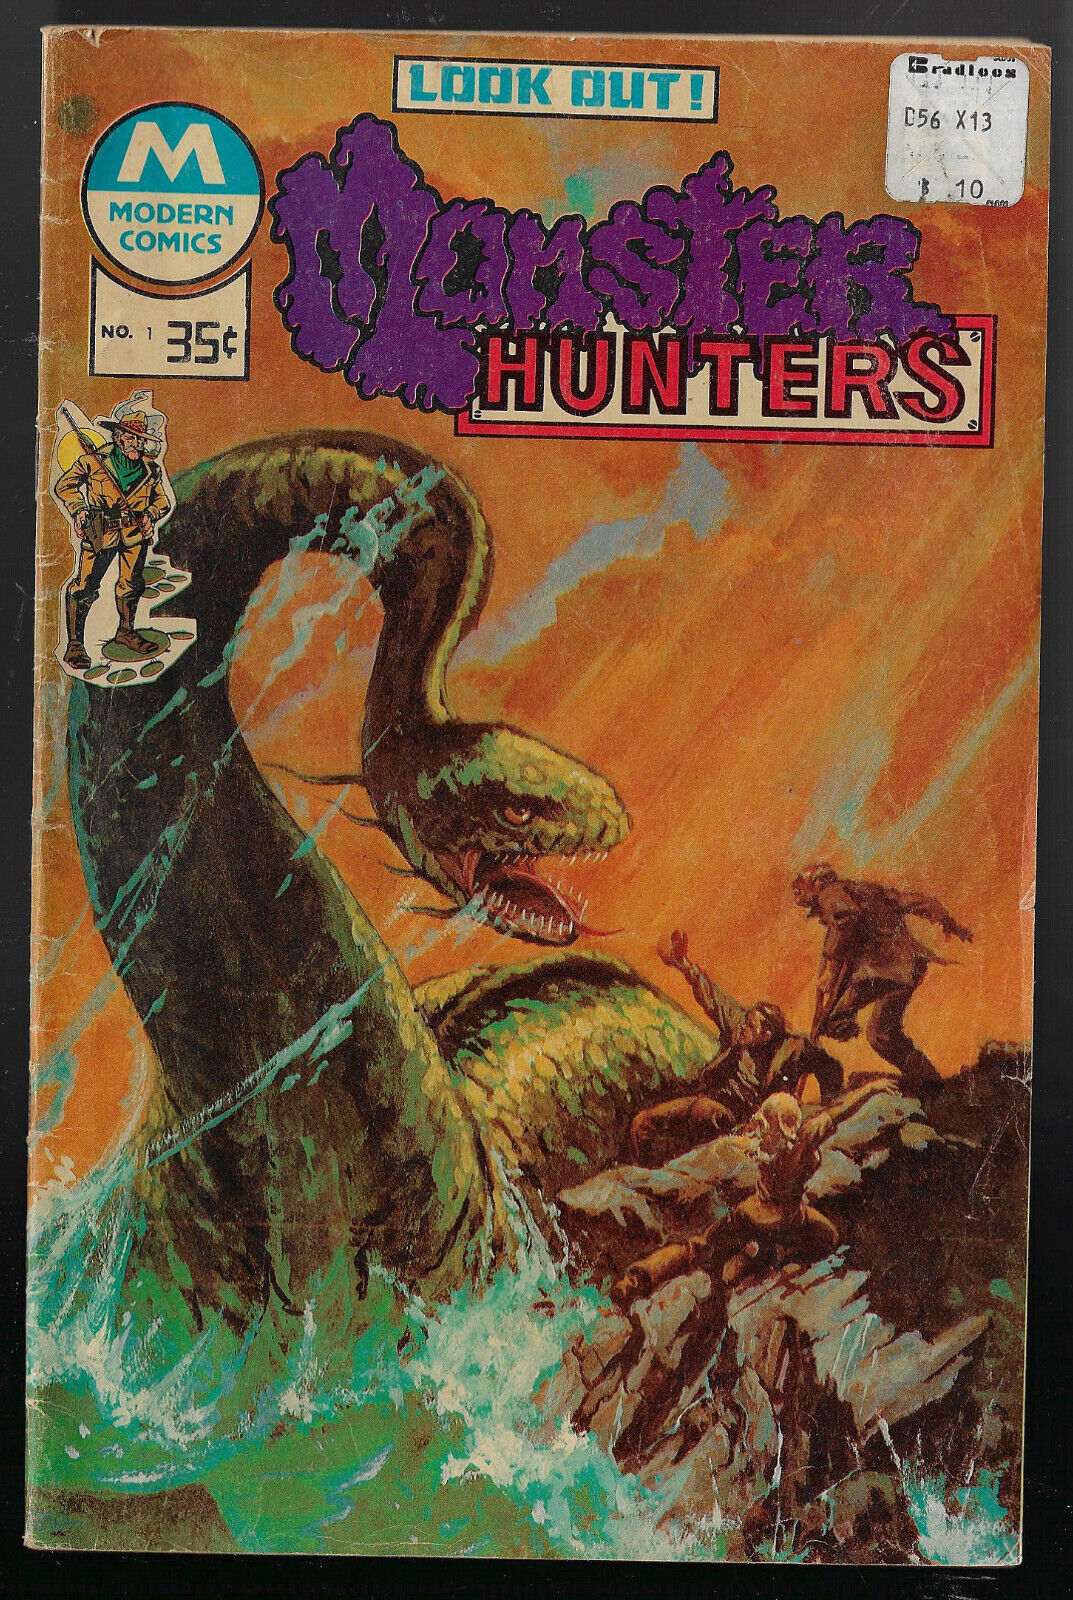 Monster Hunters #1 - Modern Comics, 1975 - $5. ships all your comics